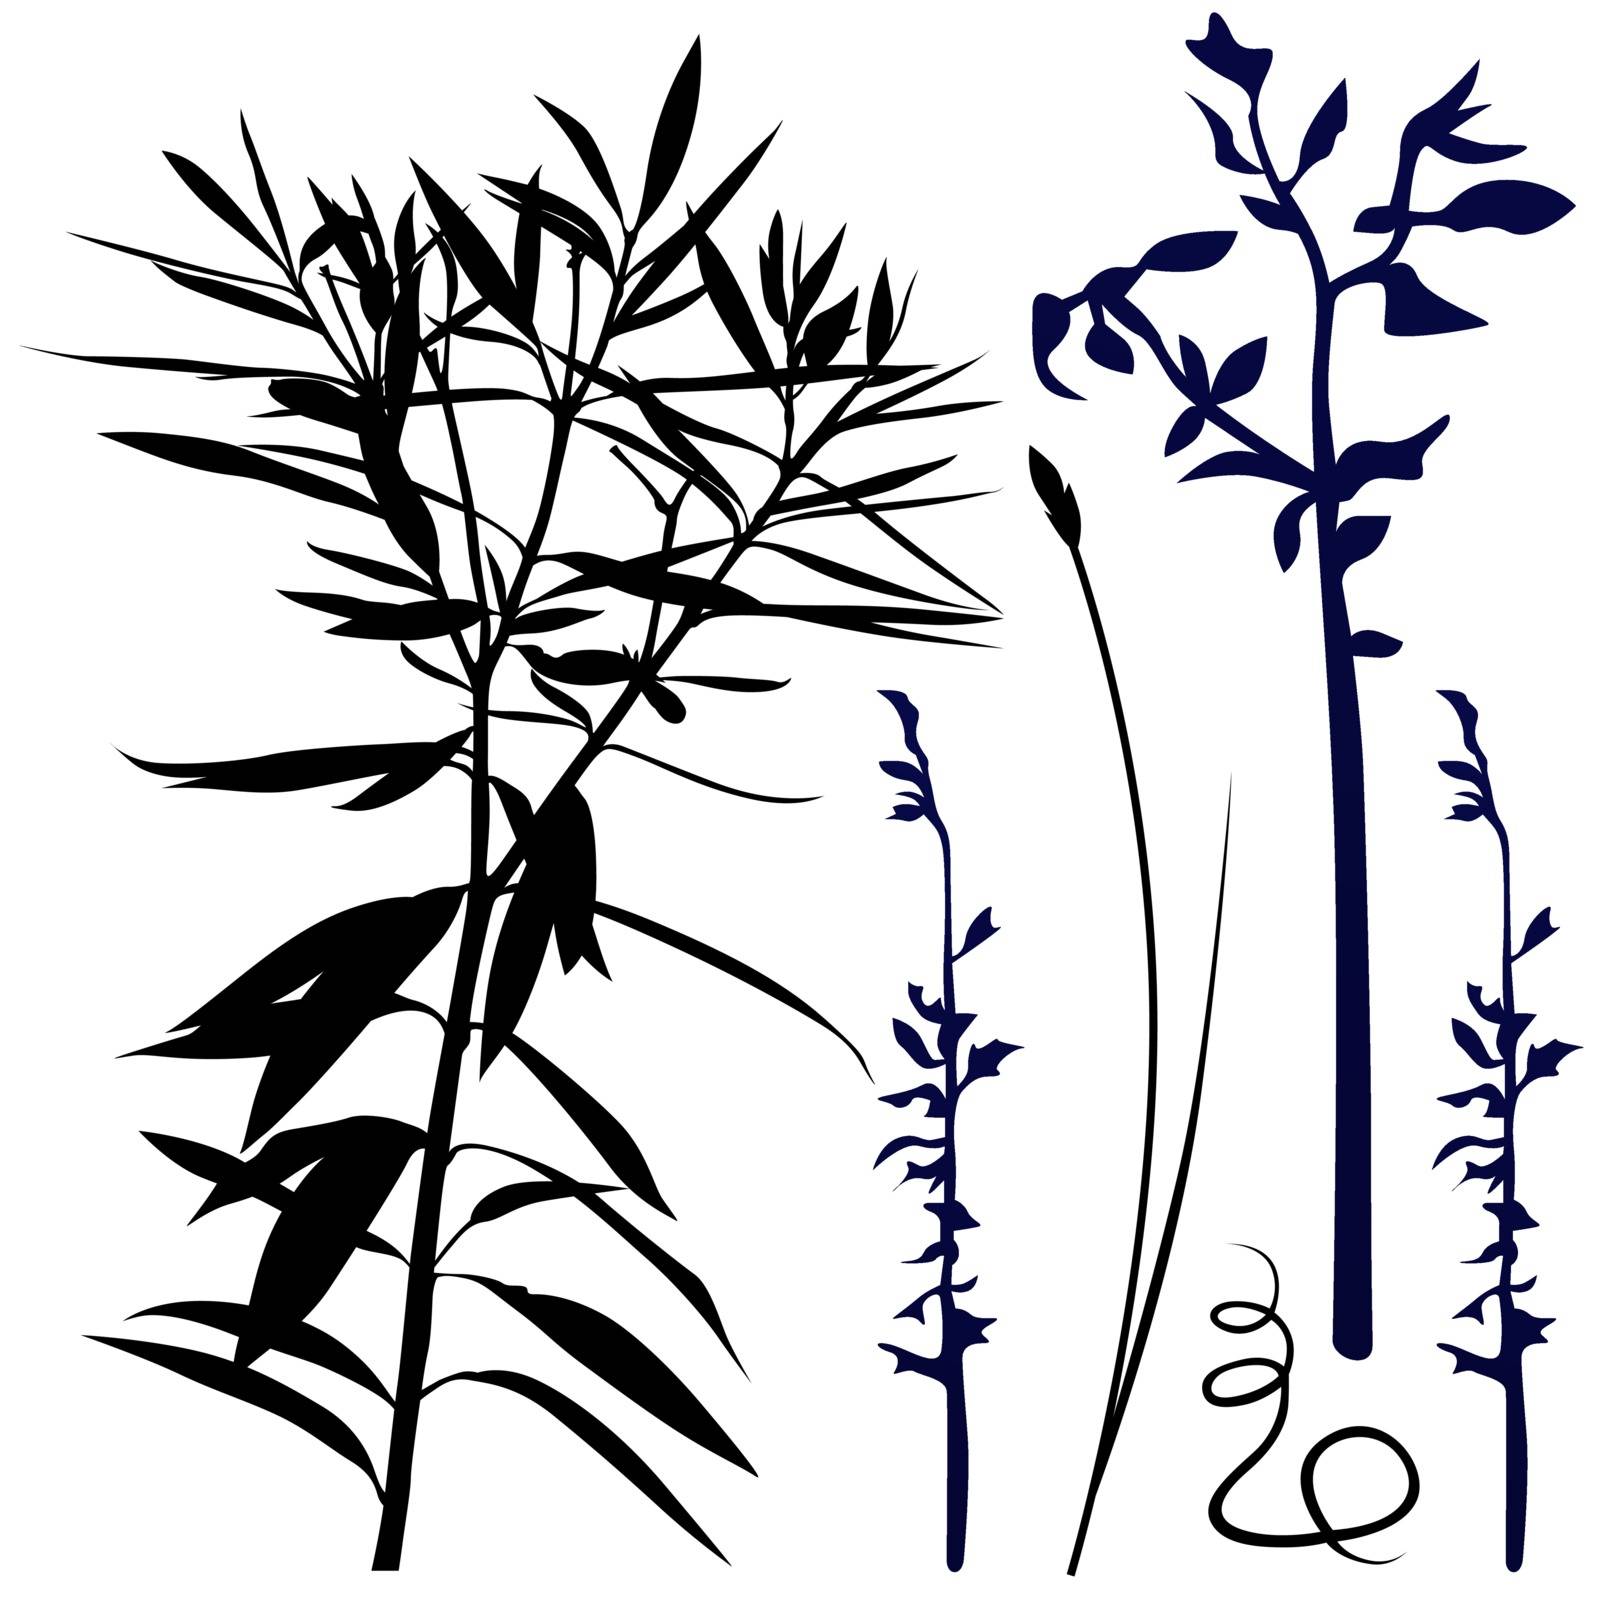 Long Plants - Black Silhouettes, Vector